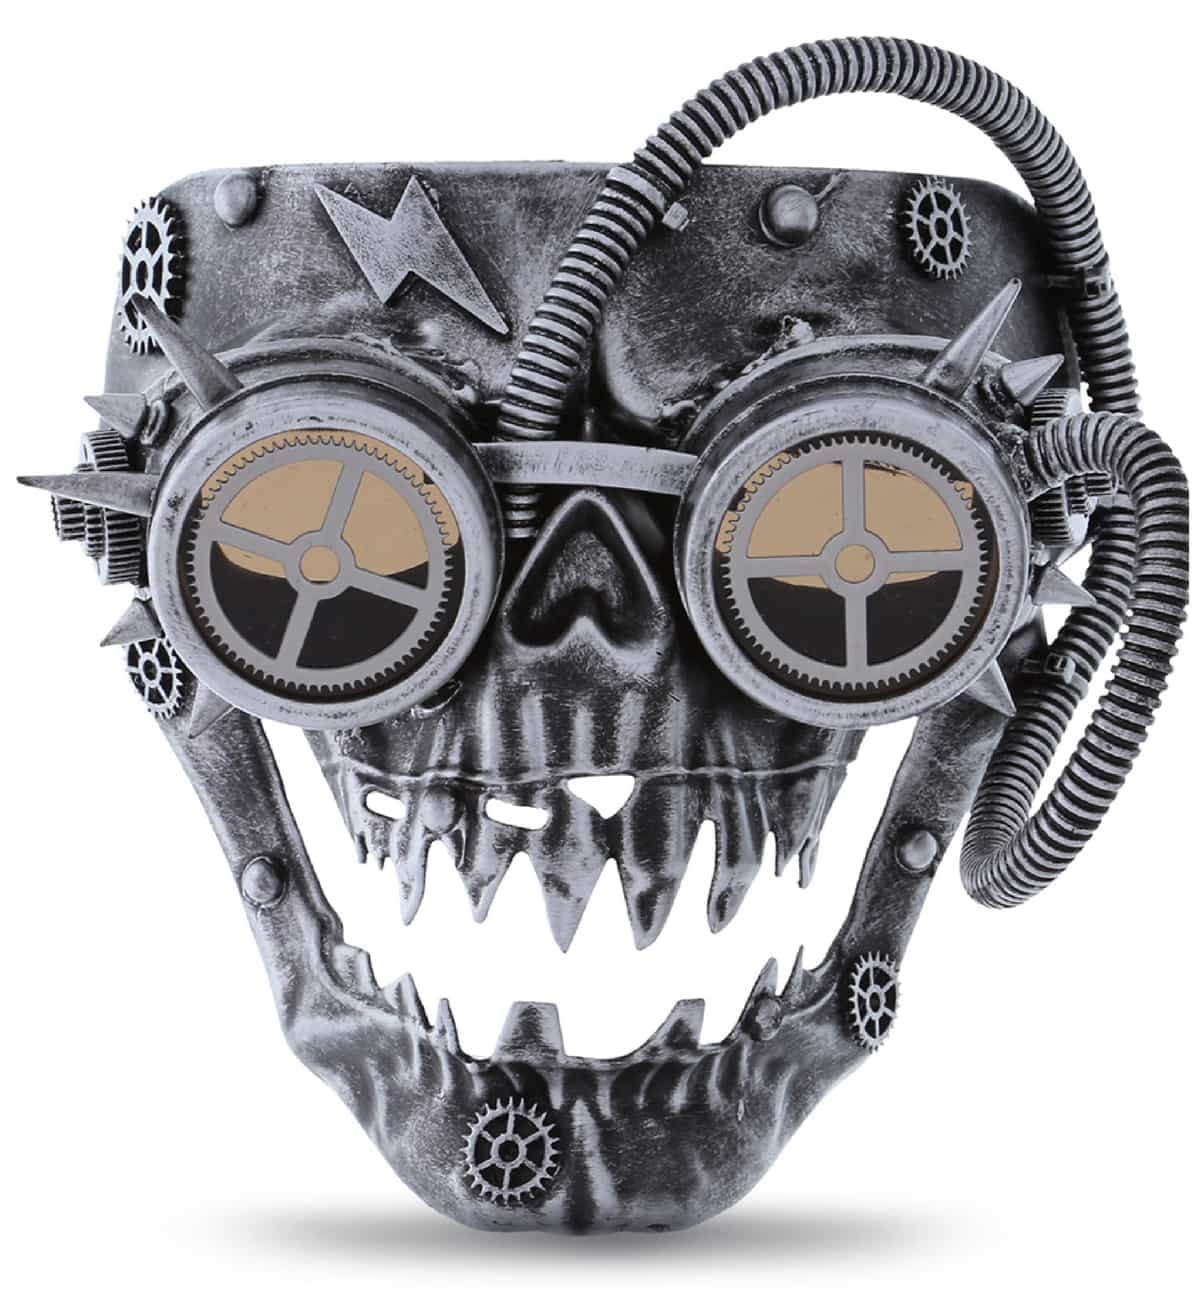 Red Phantom of the Opera Inspired Rocker Steam Punk Mask Metal Spikes Costume 